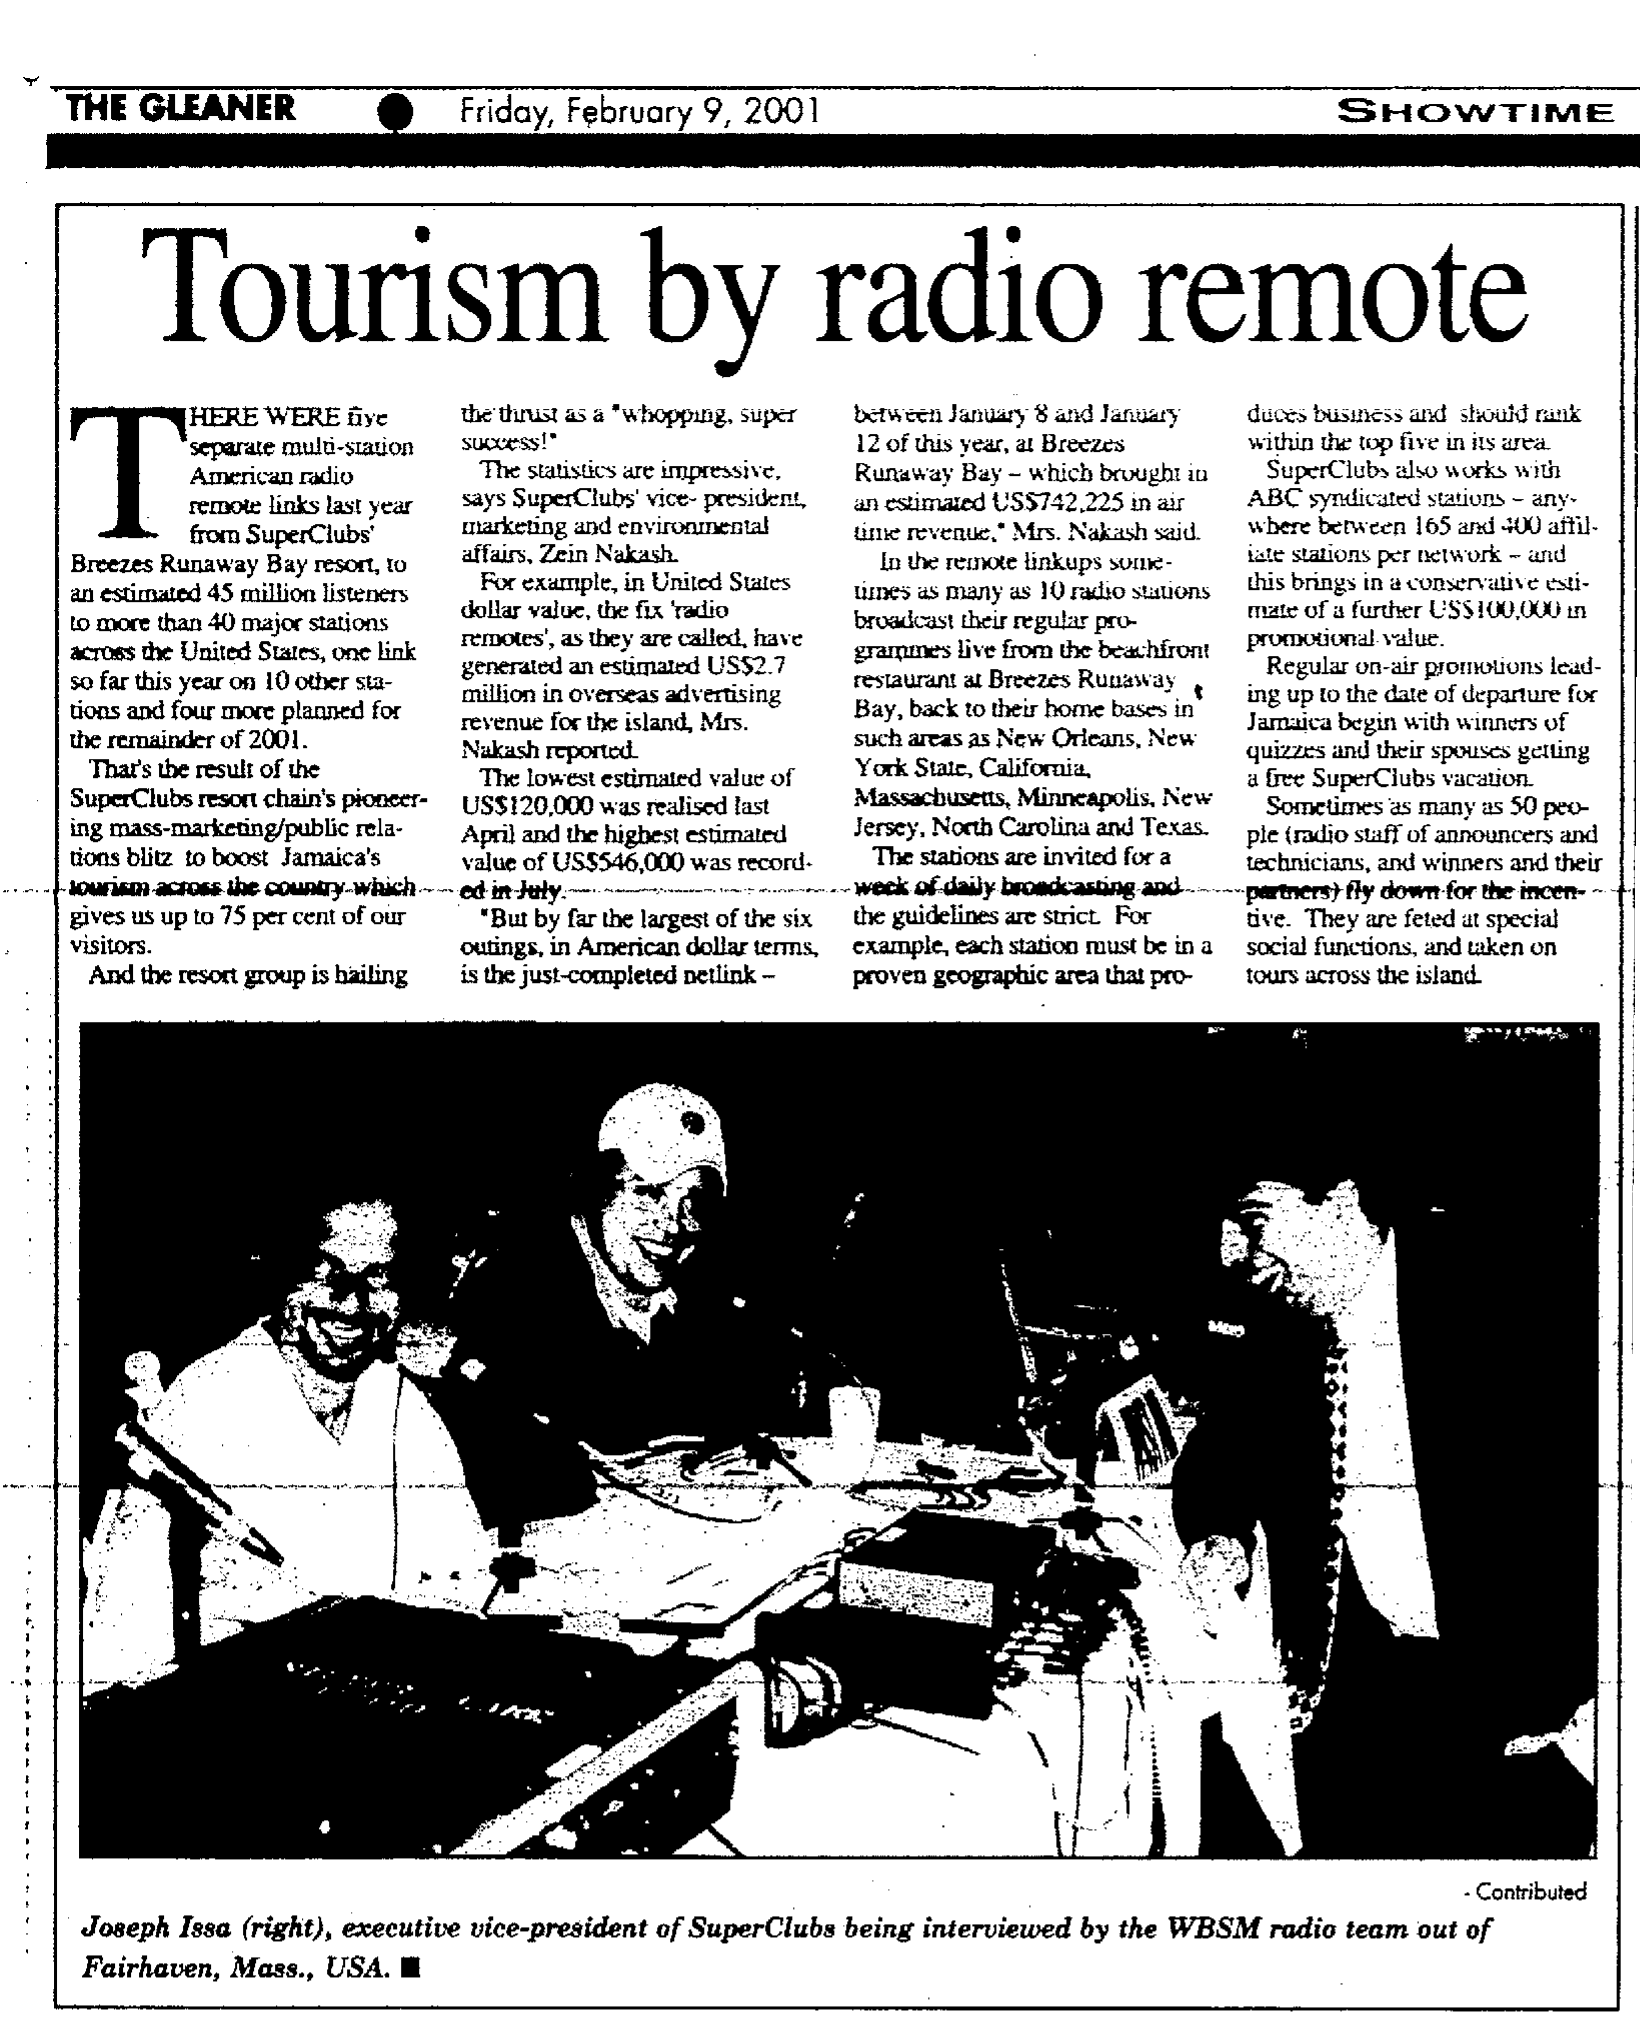 Tourism by radio remote